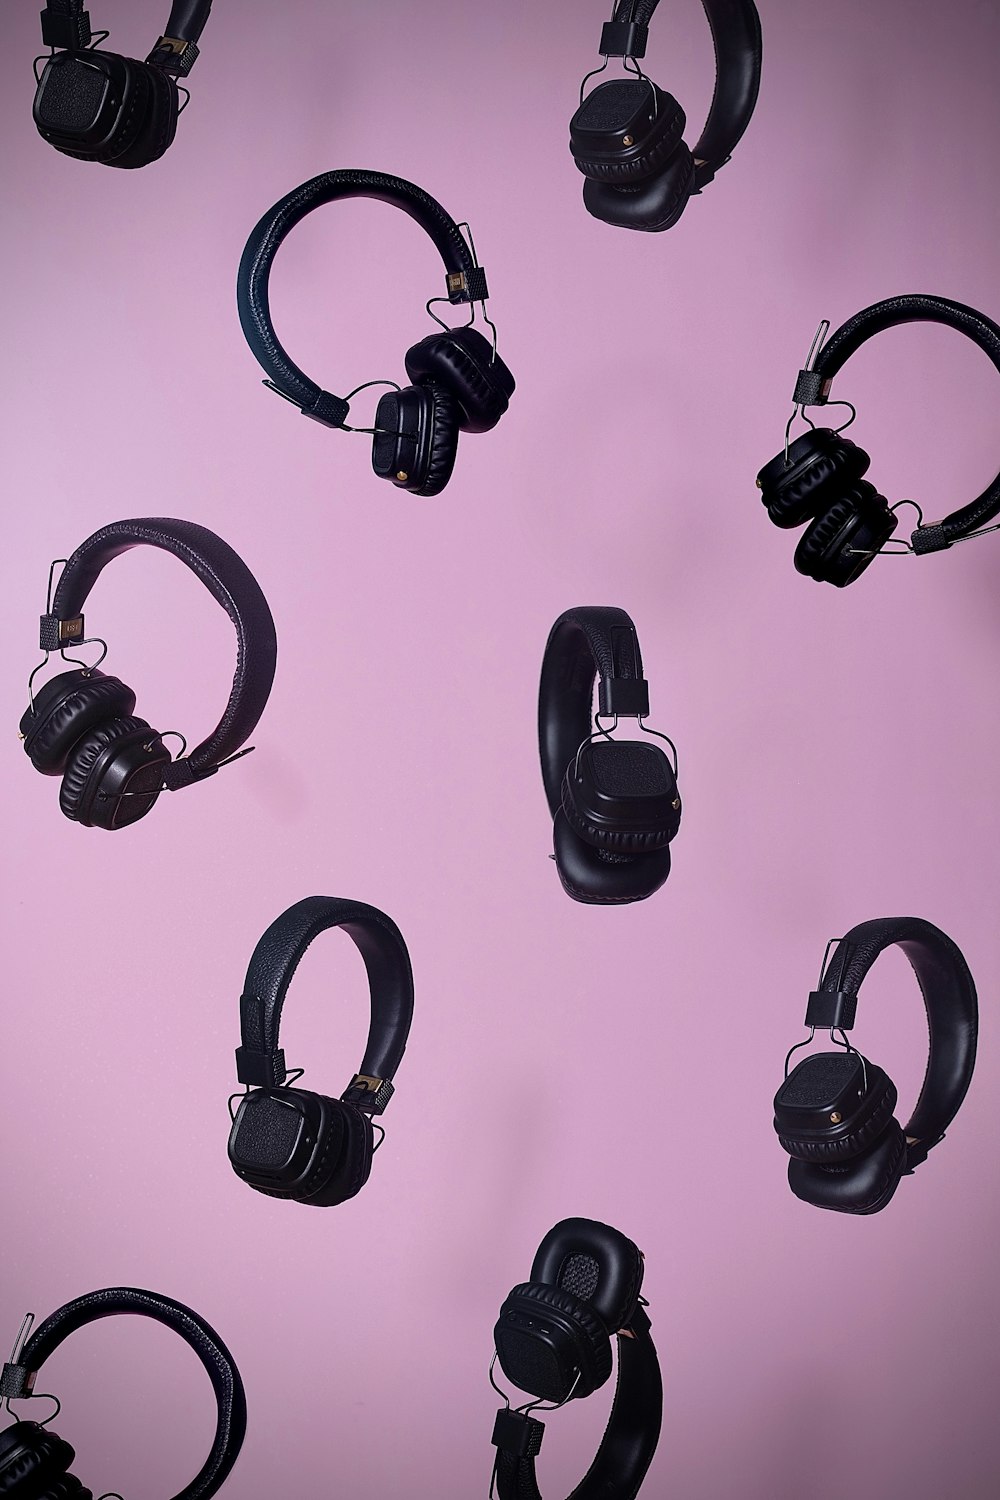 27+ Headphones Pictures | Download Free Images on Unsplash